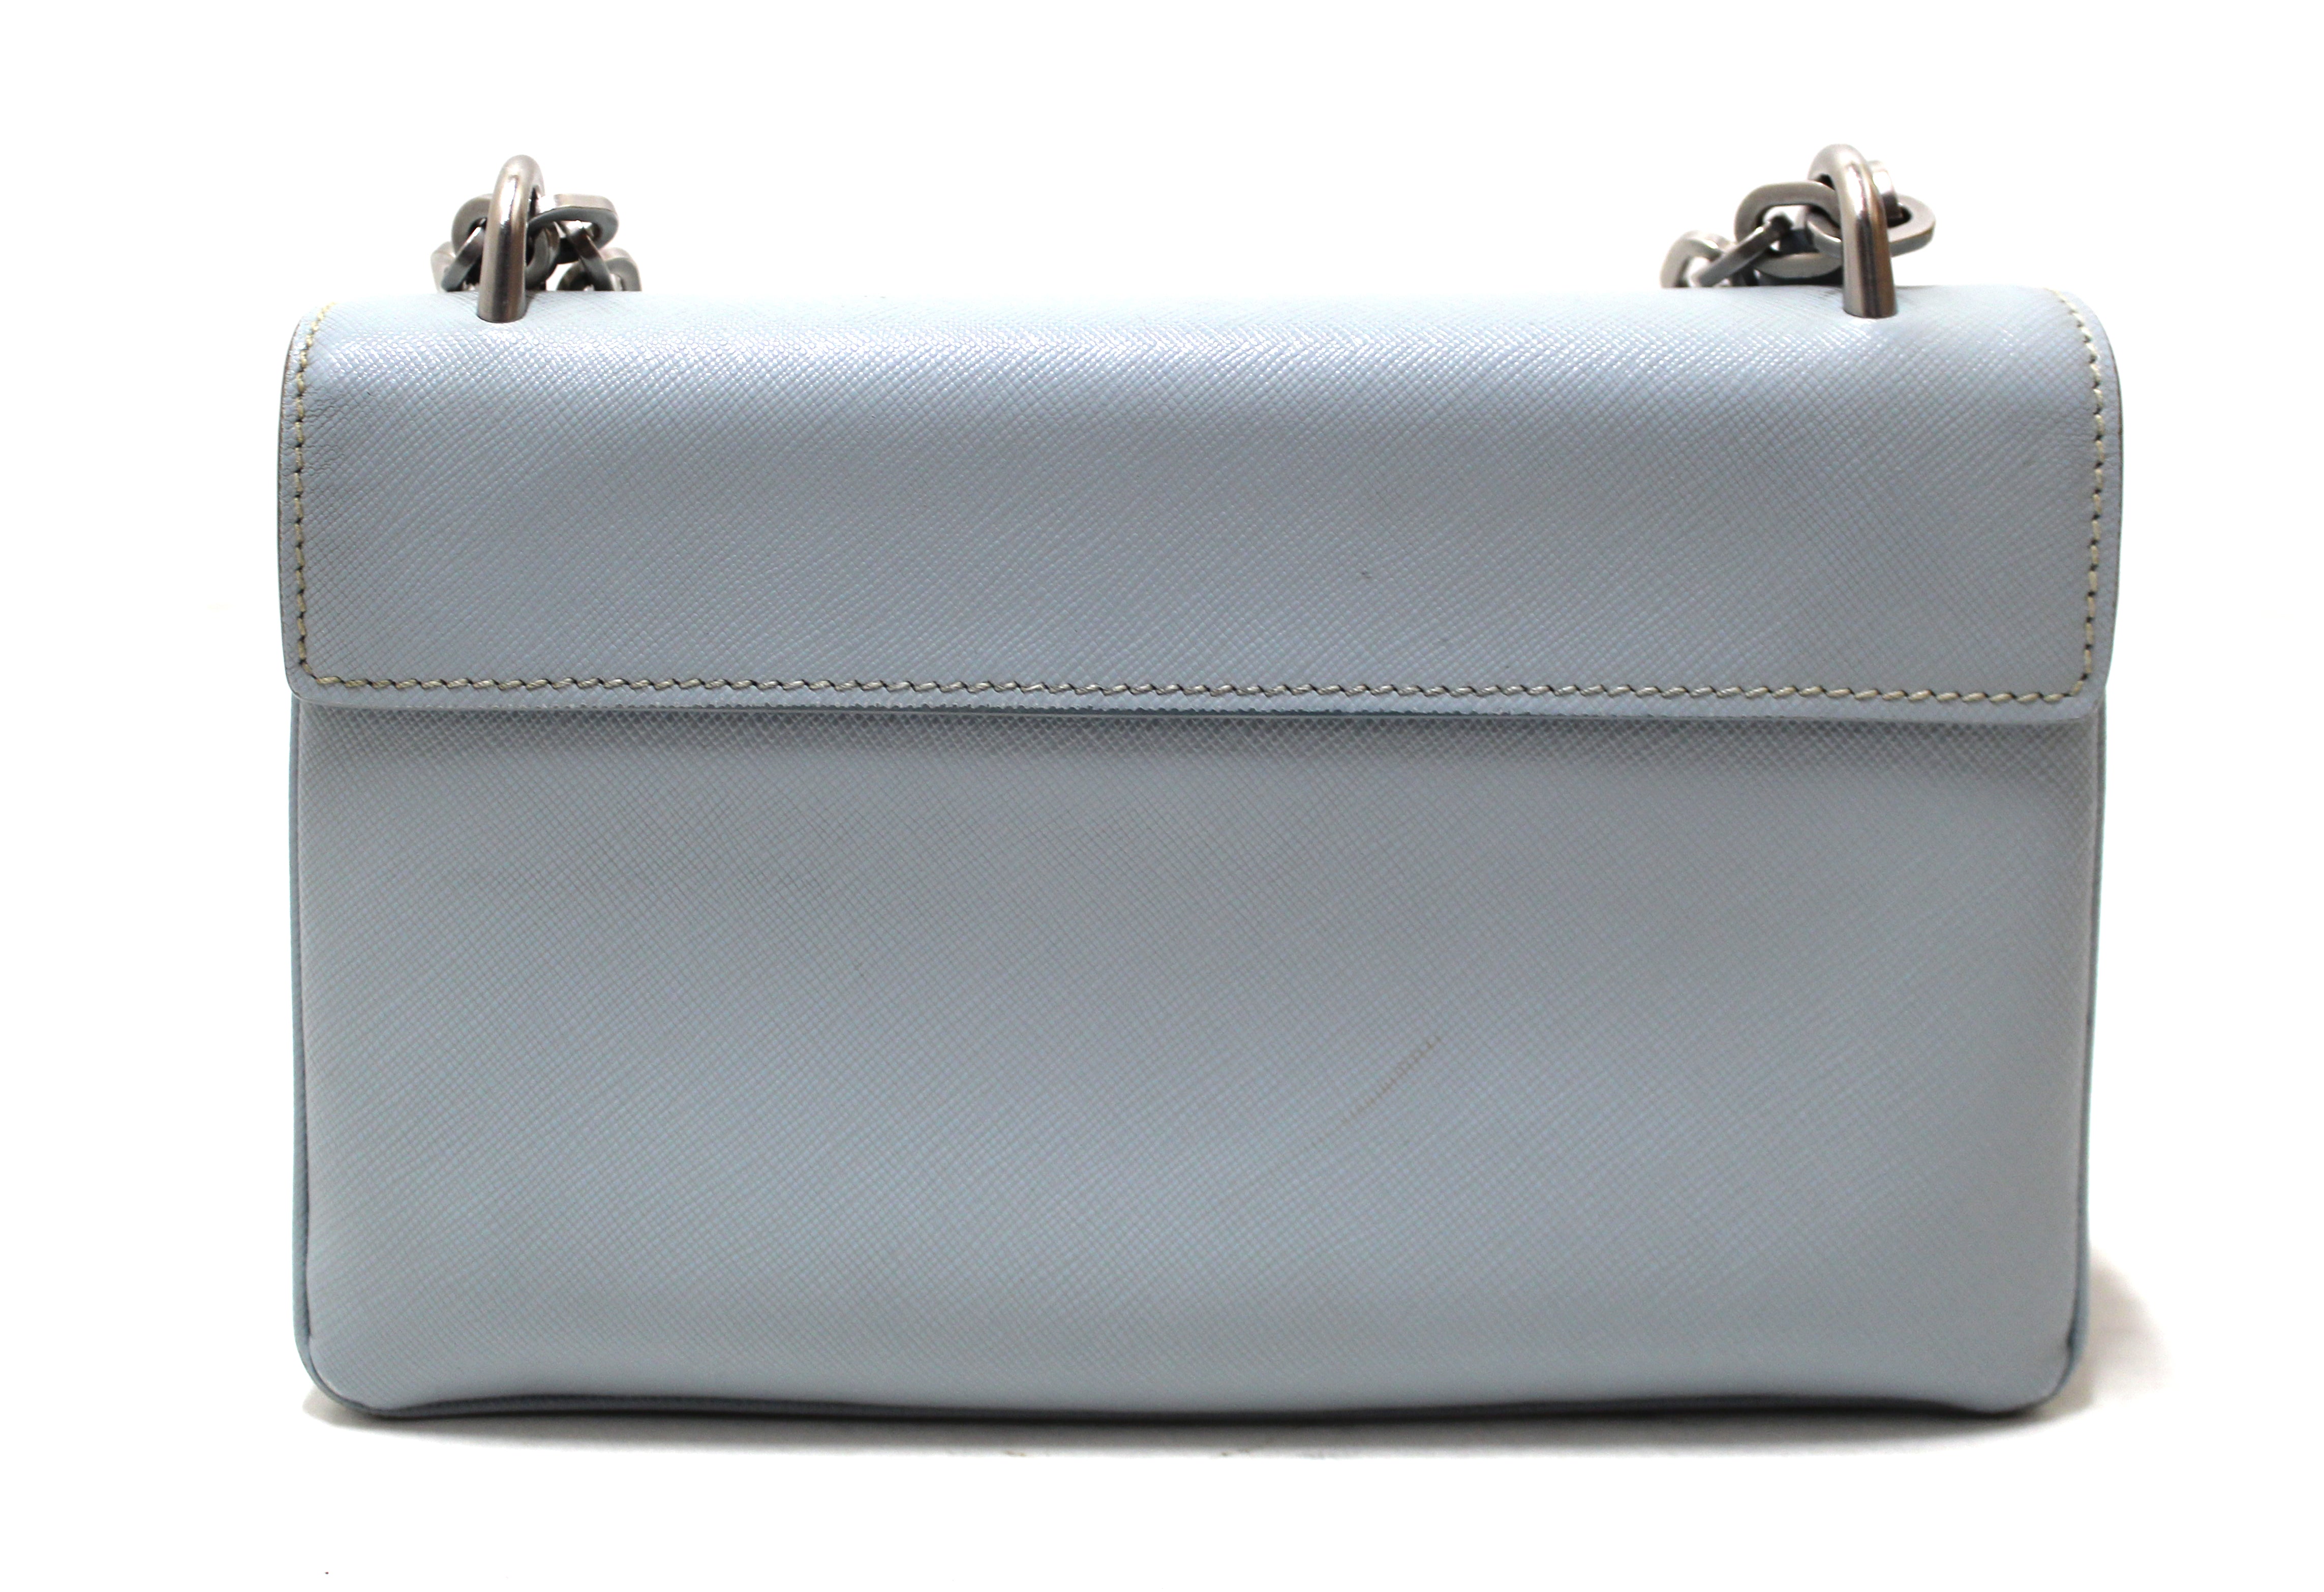 Authentic Prada Powder Blue Saffiano Leather Mini Bag With Chain Crossbody Bag